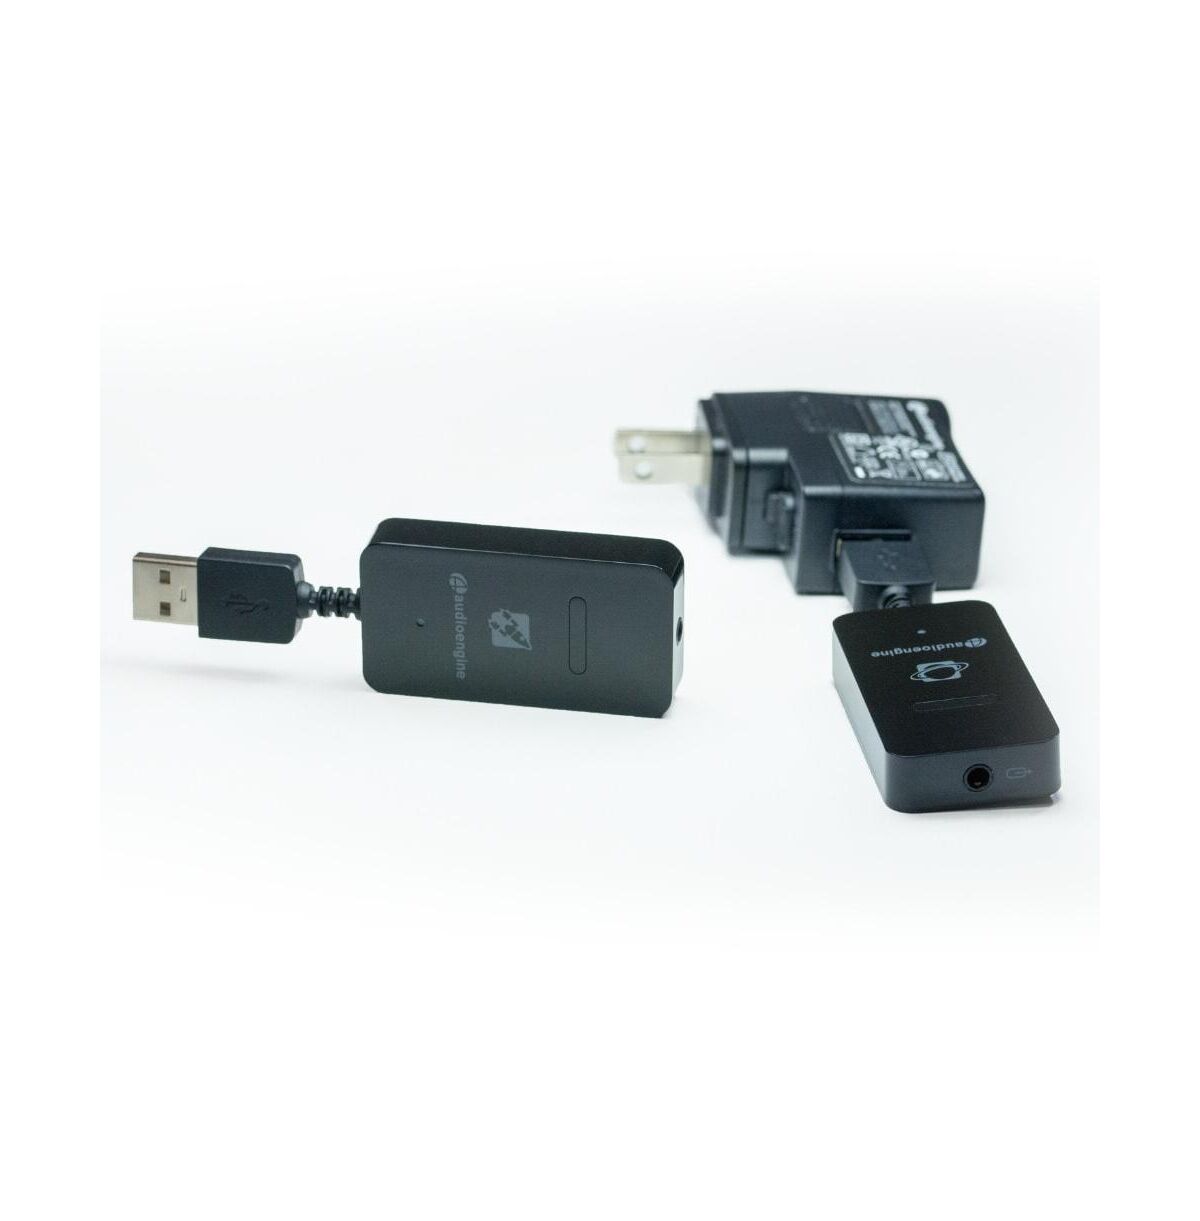 Audioengine W3 Wireless Audio Adapter Transmitter and Receiver - Black